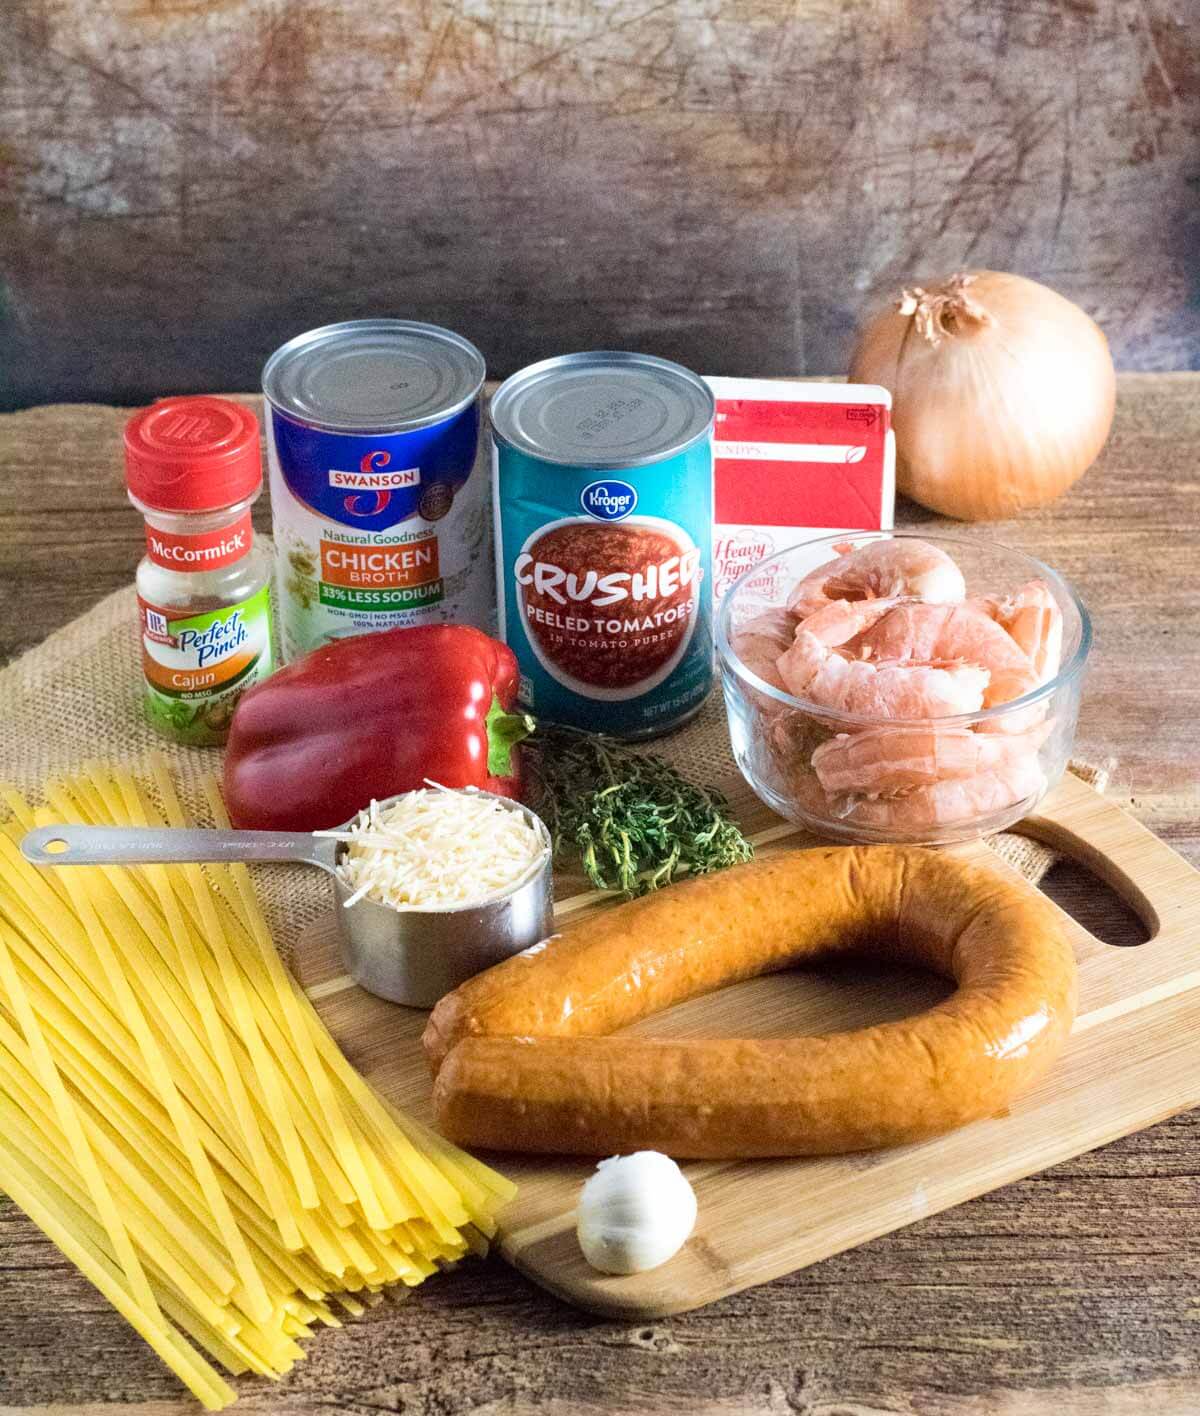 Showing ingredients for Cajun shrimp and sausage pasta.